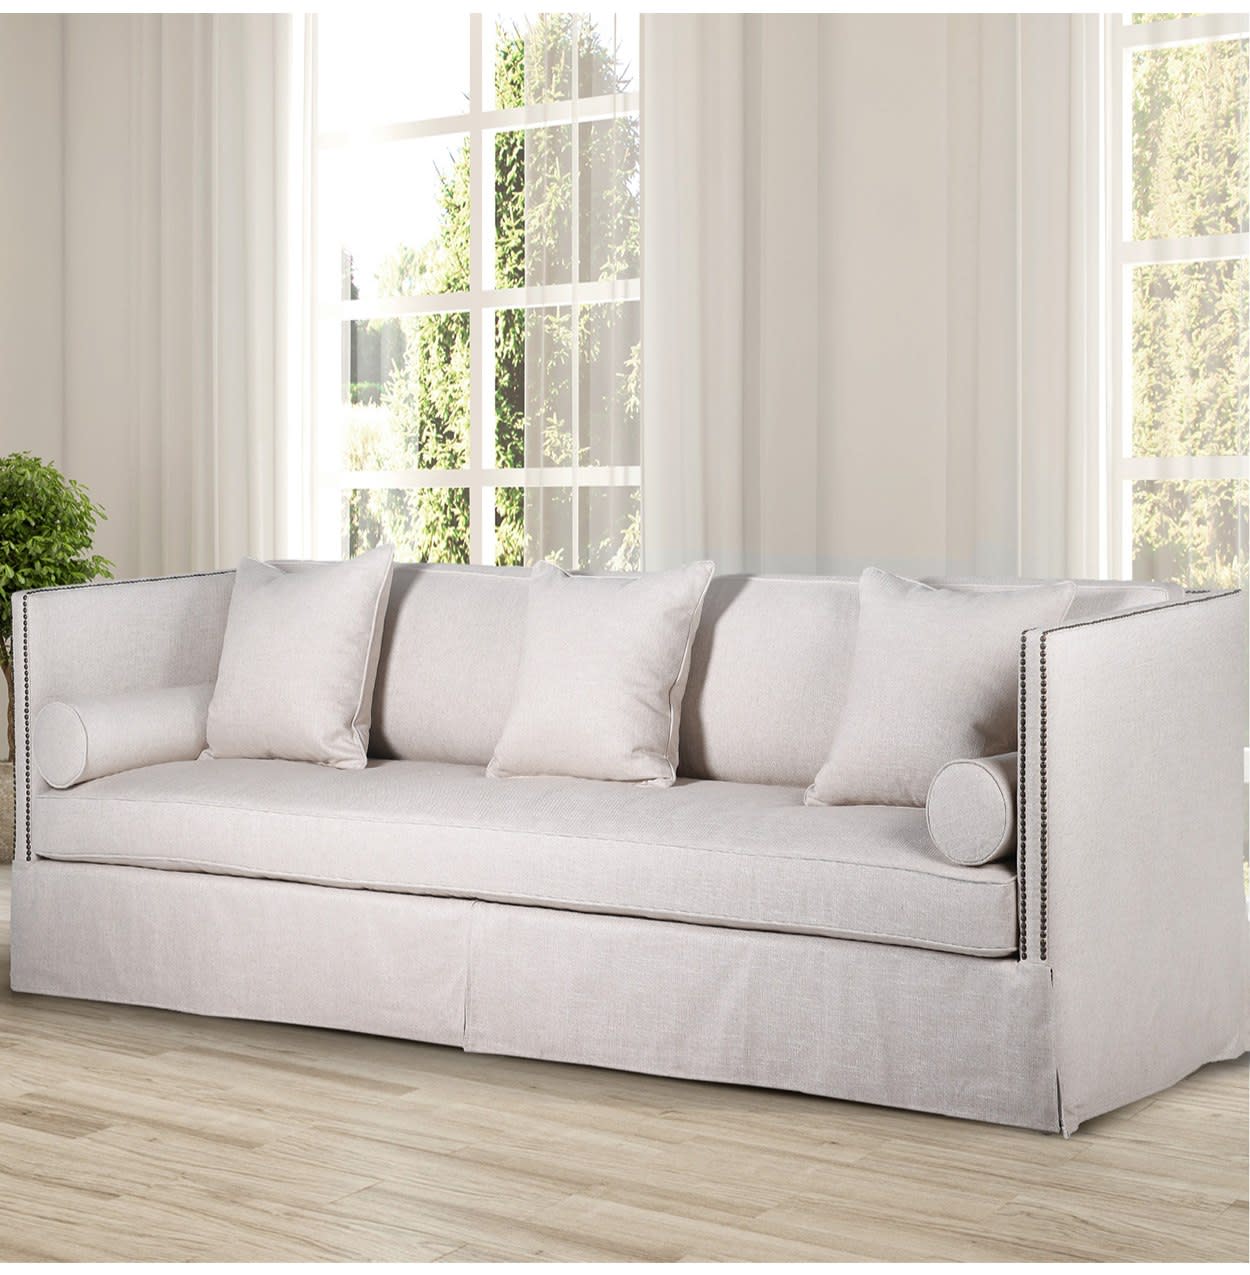 New Hampshire Linen Studded Sofa